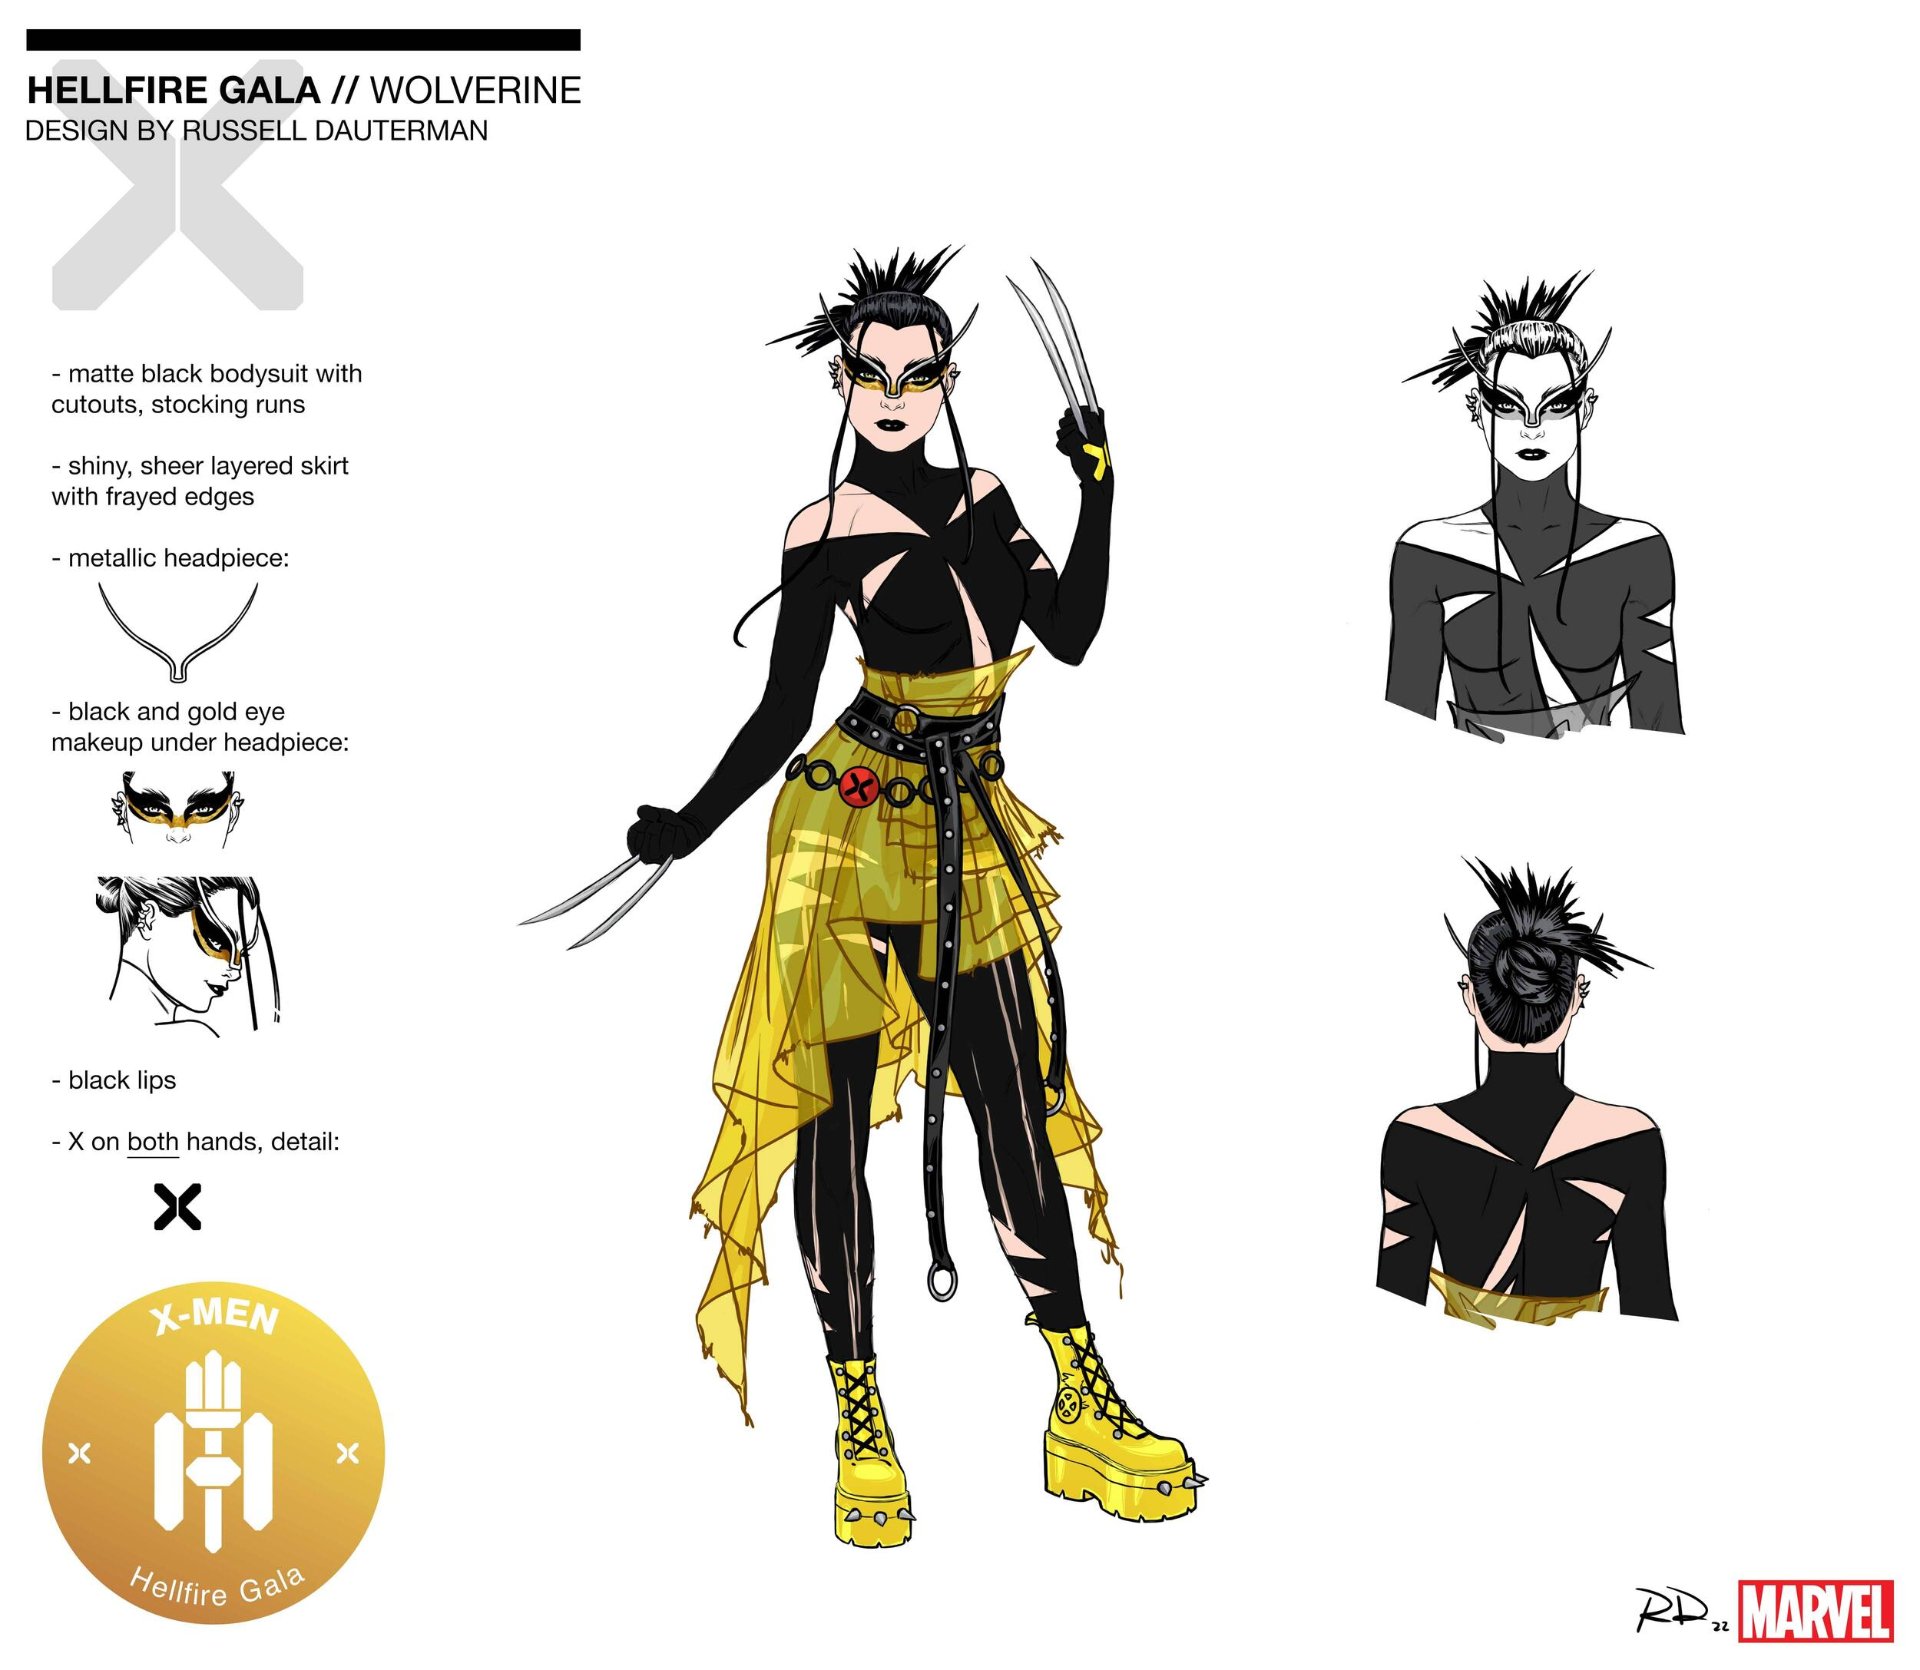 Hellfire Gala 2022 designs